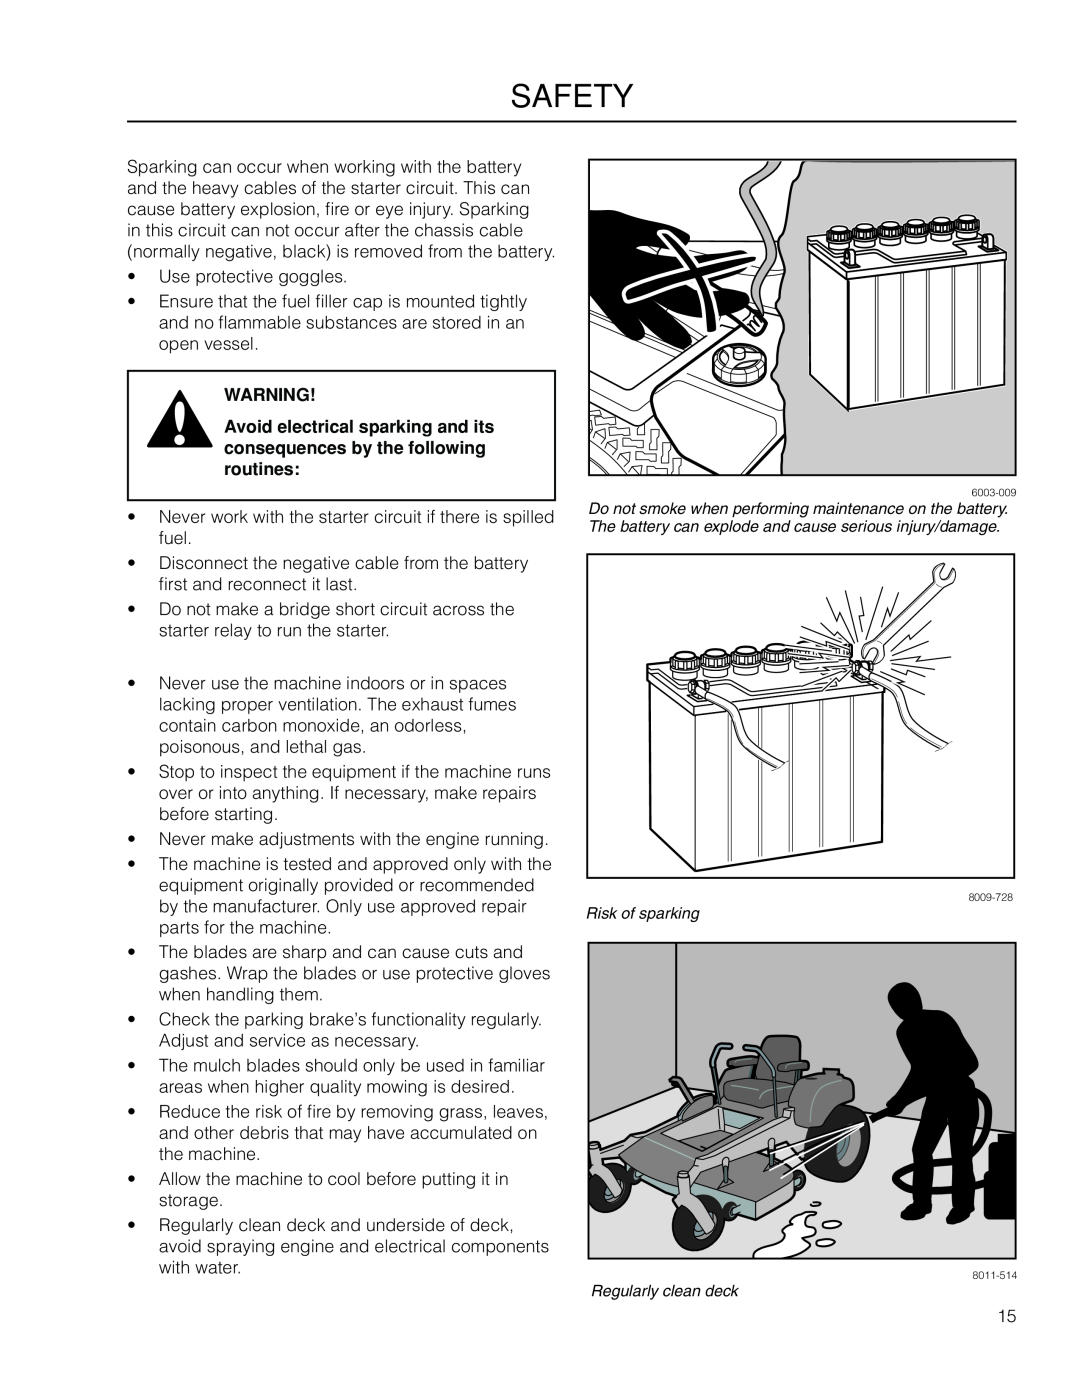 Dixon 966503601, SZ4619 CA manual Safety, Use protective goggles 